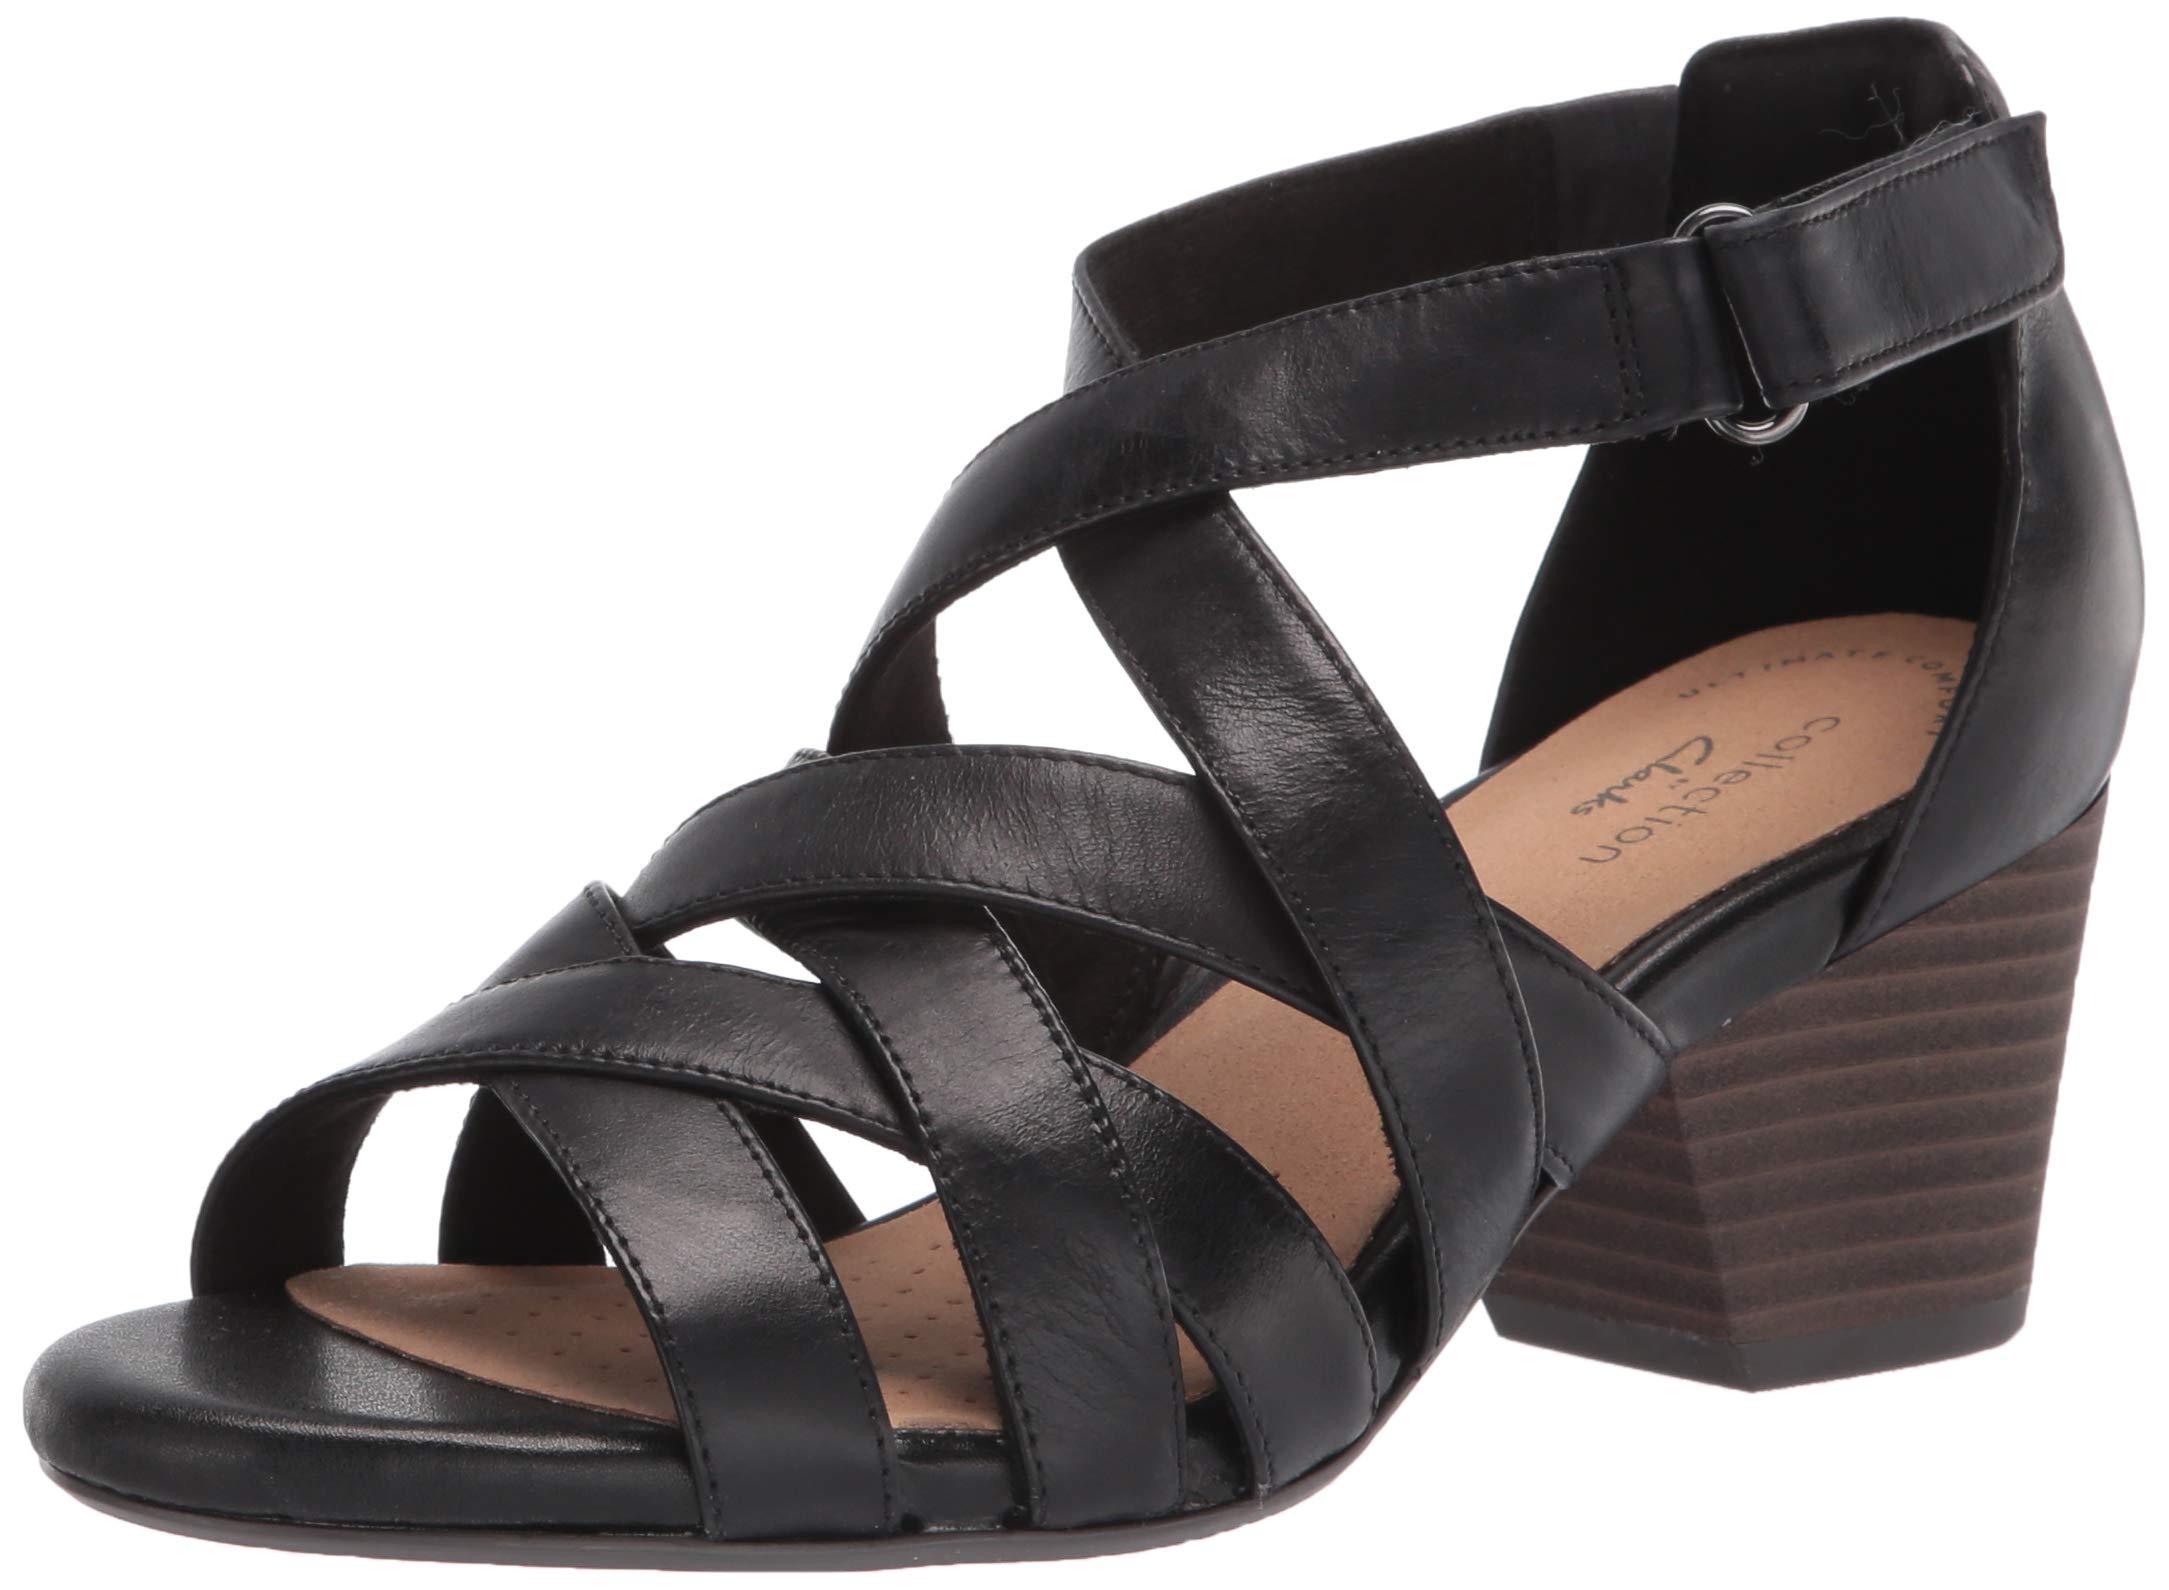 Clarks Lorene Pop Heeled Sandal in Black Leather (Black) - Save 51% | Lyst